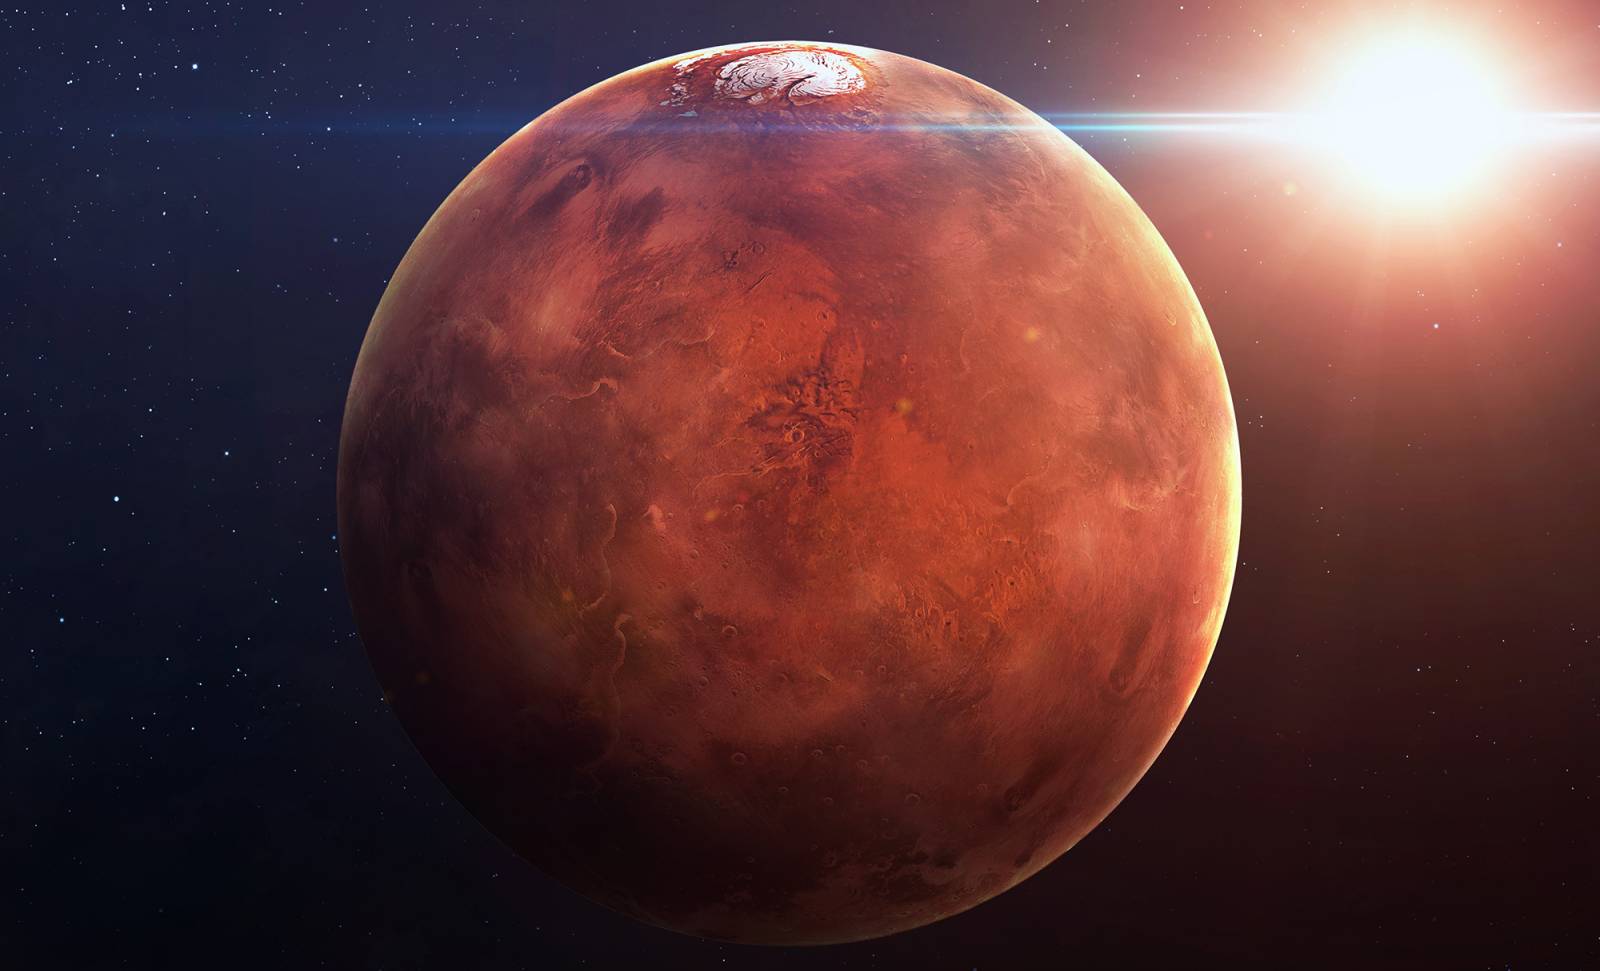 Imaginea ULUITOARE Planeta Marte publicata NASA